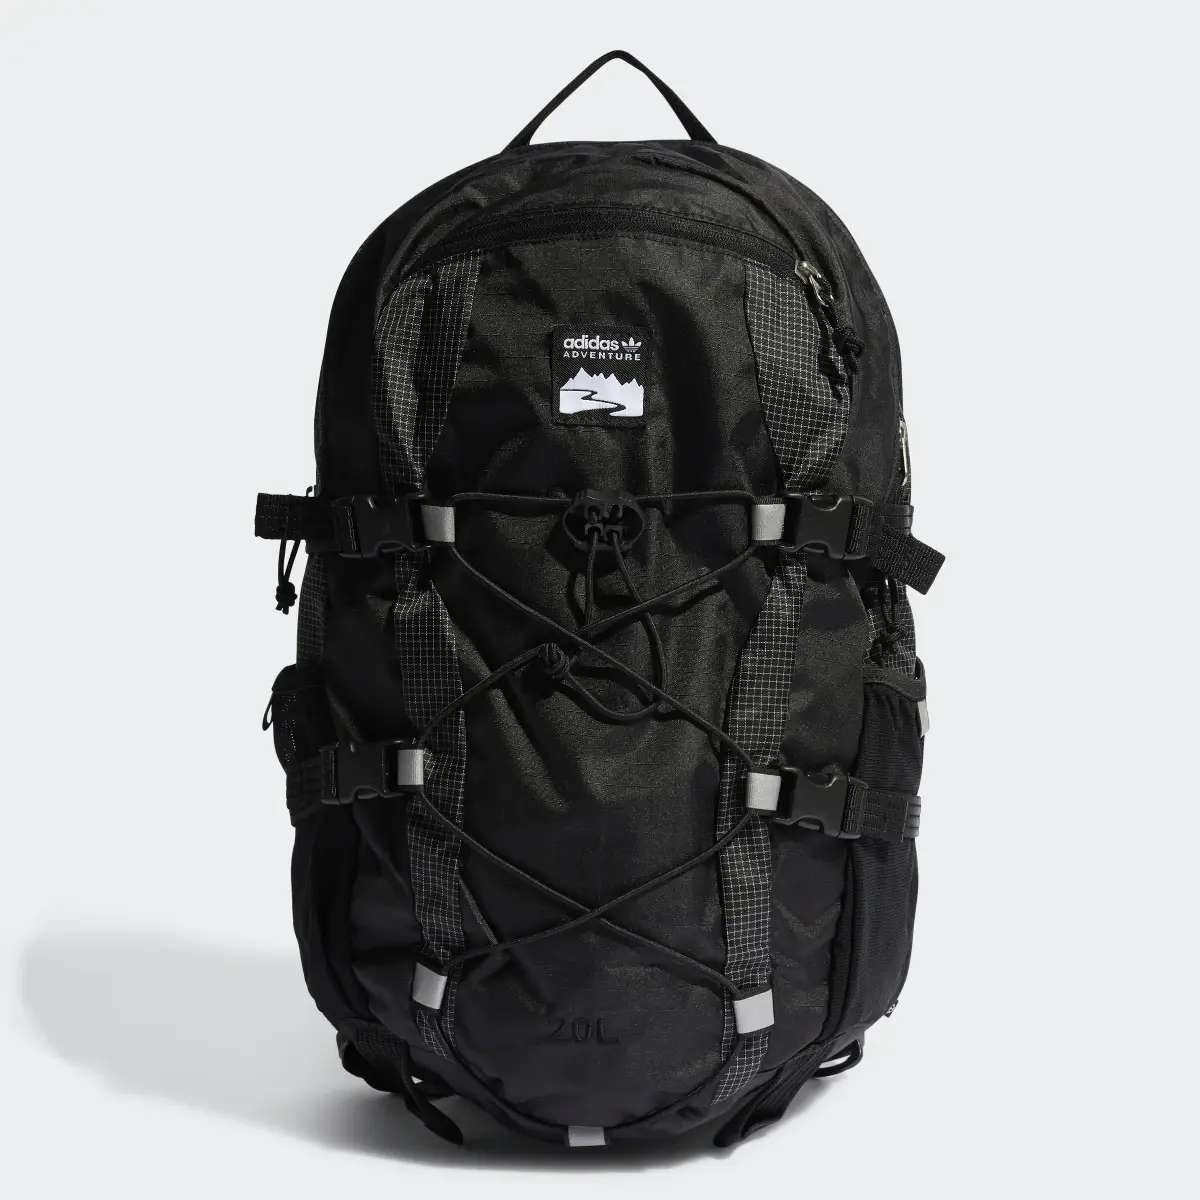 Adidas Adventure Backpack Large. 2